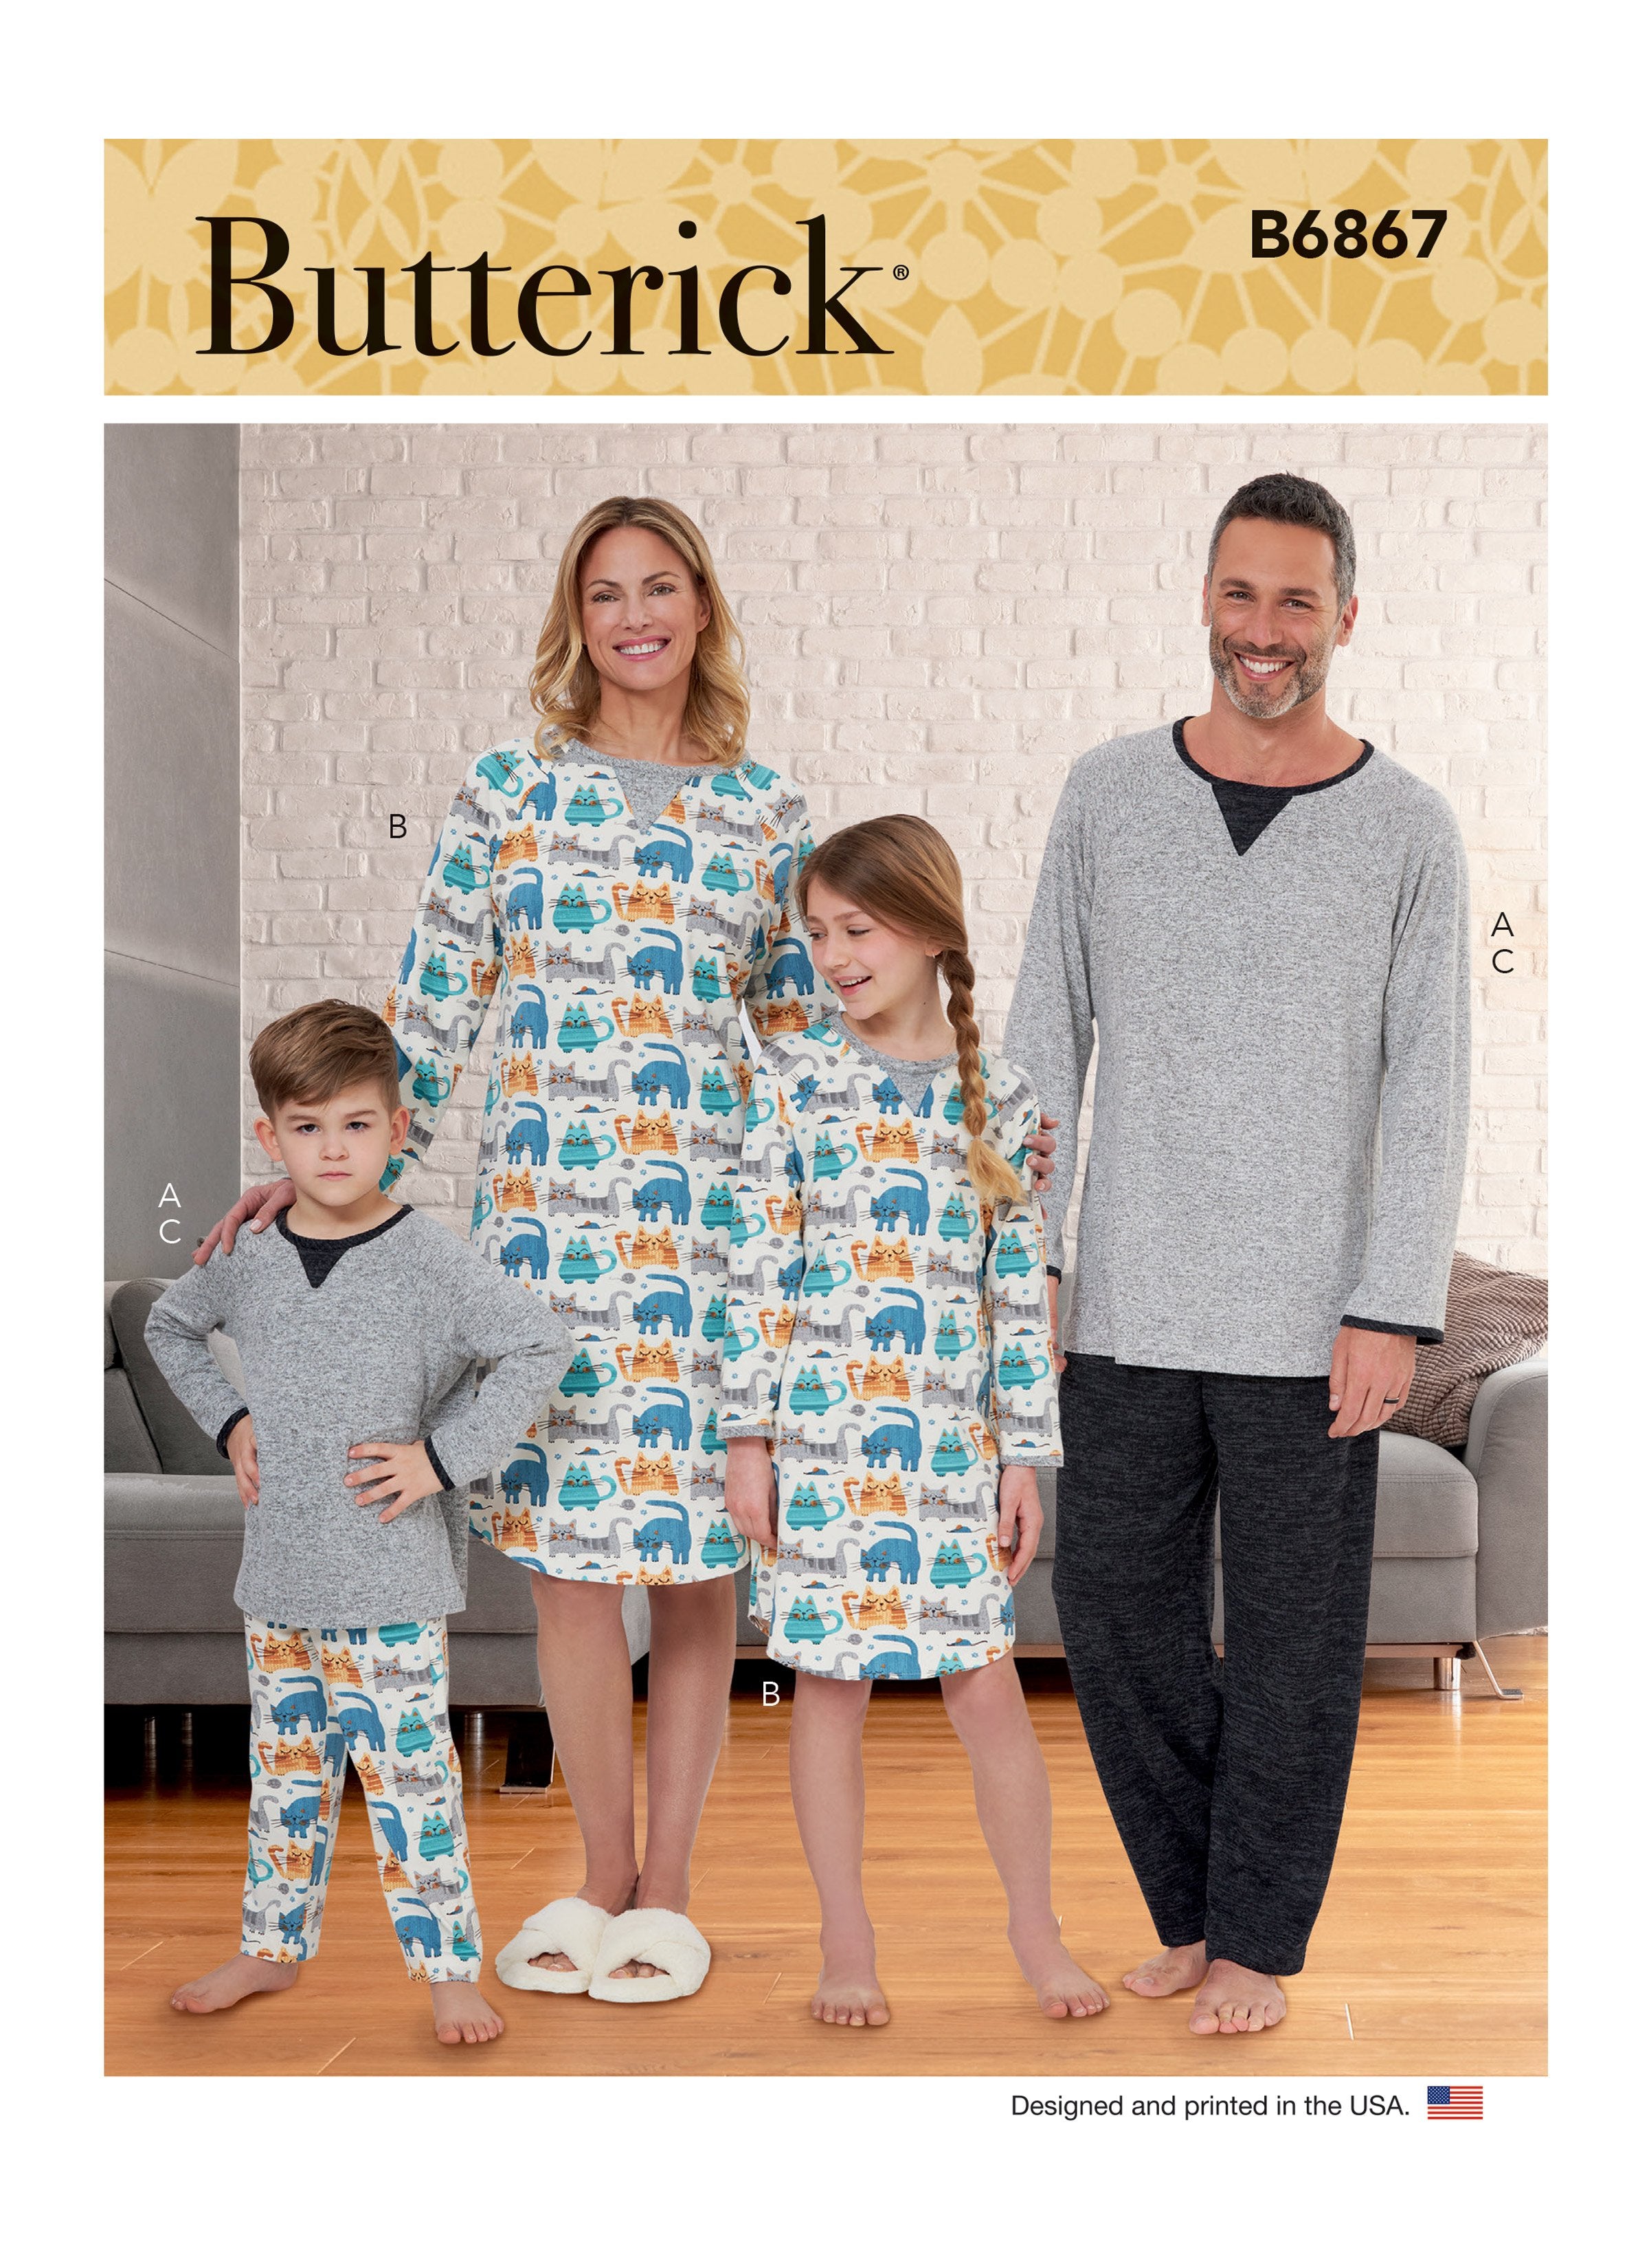 Butterick sewing pattern 6867 Unisex Sleepwear from Jaycotts Sewing Supplies